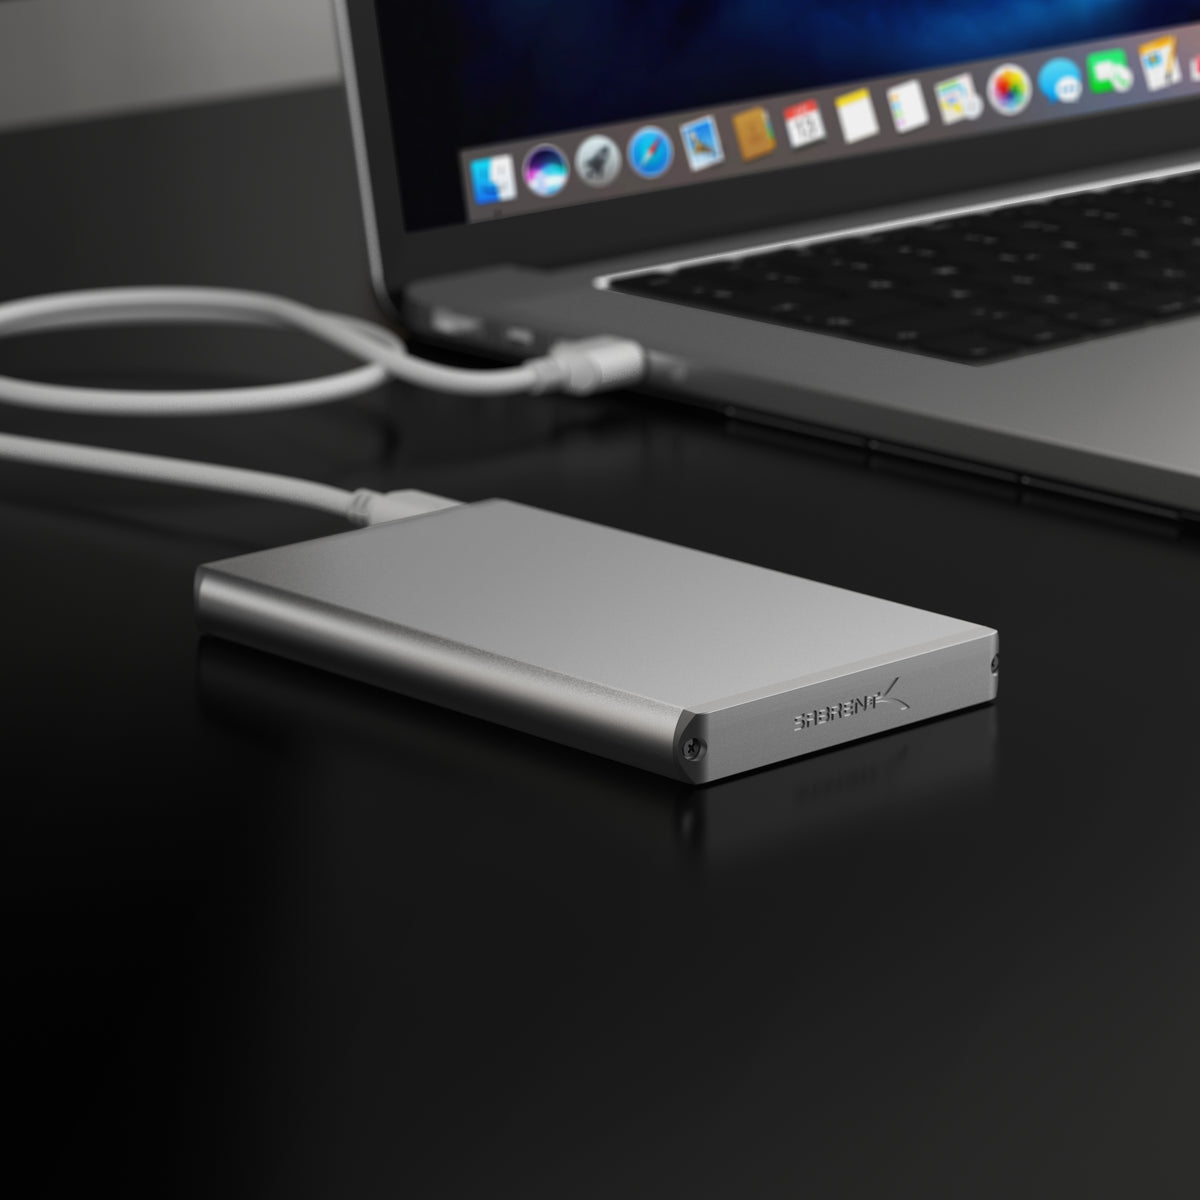 USB 3.0 to 2.5-Inch SATA External Aluminum Hard Drive Enclosure